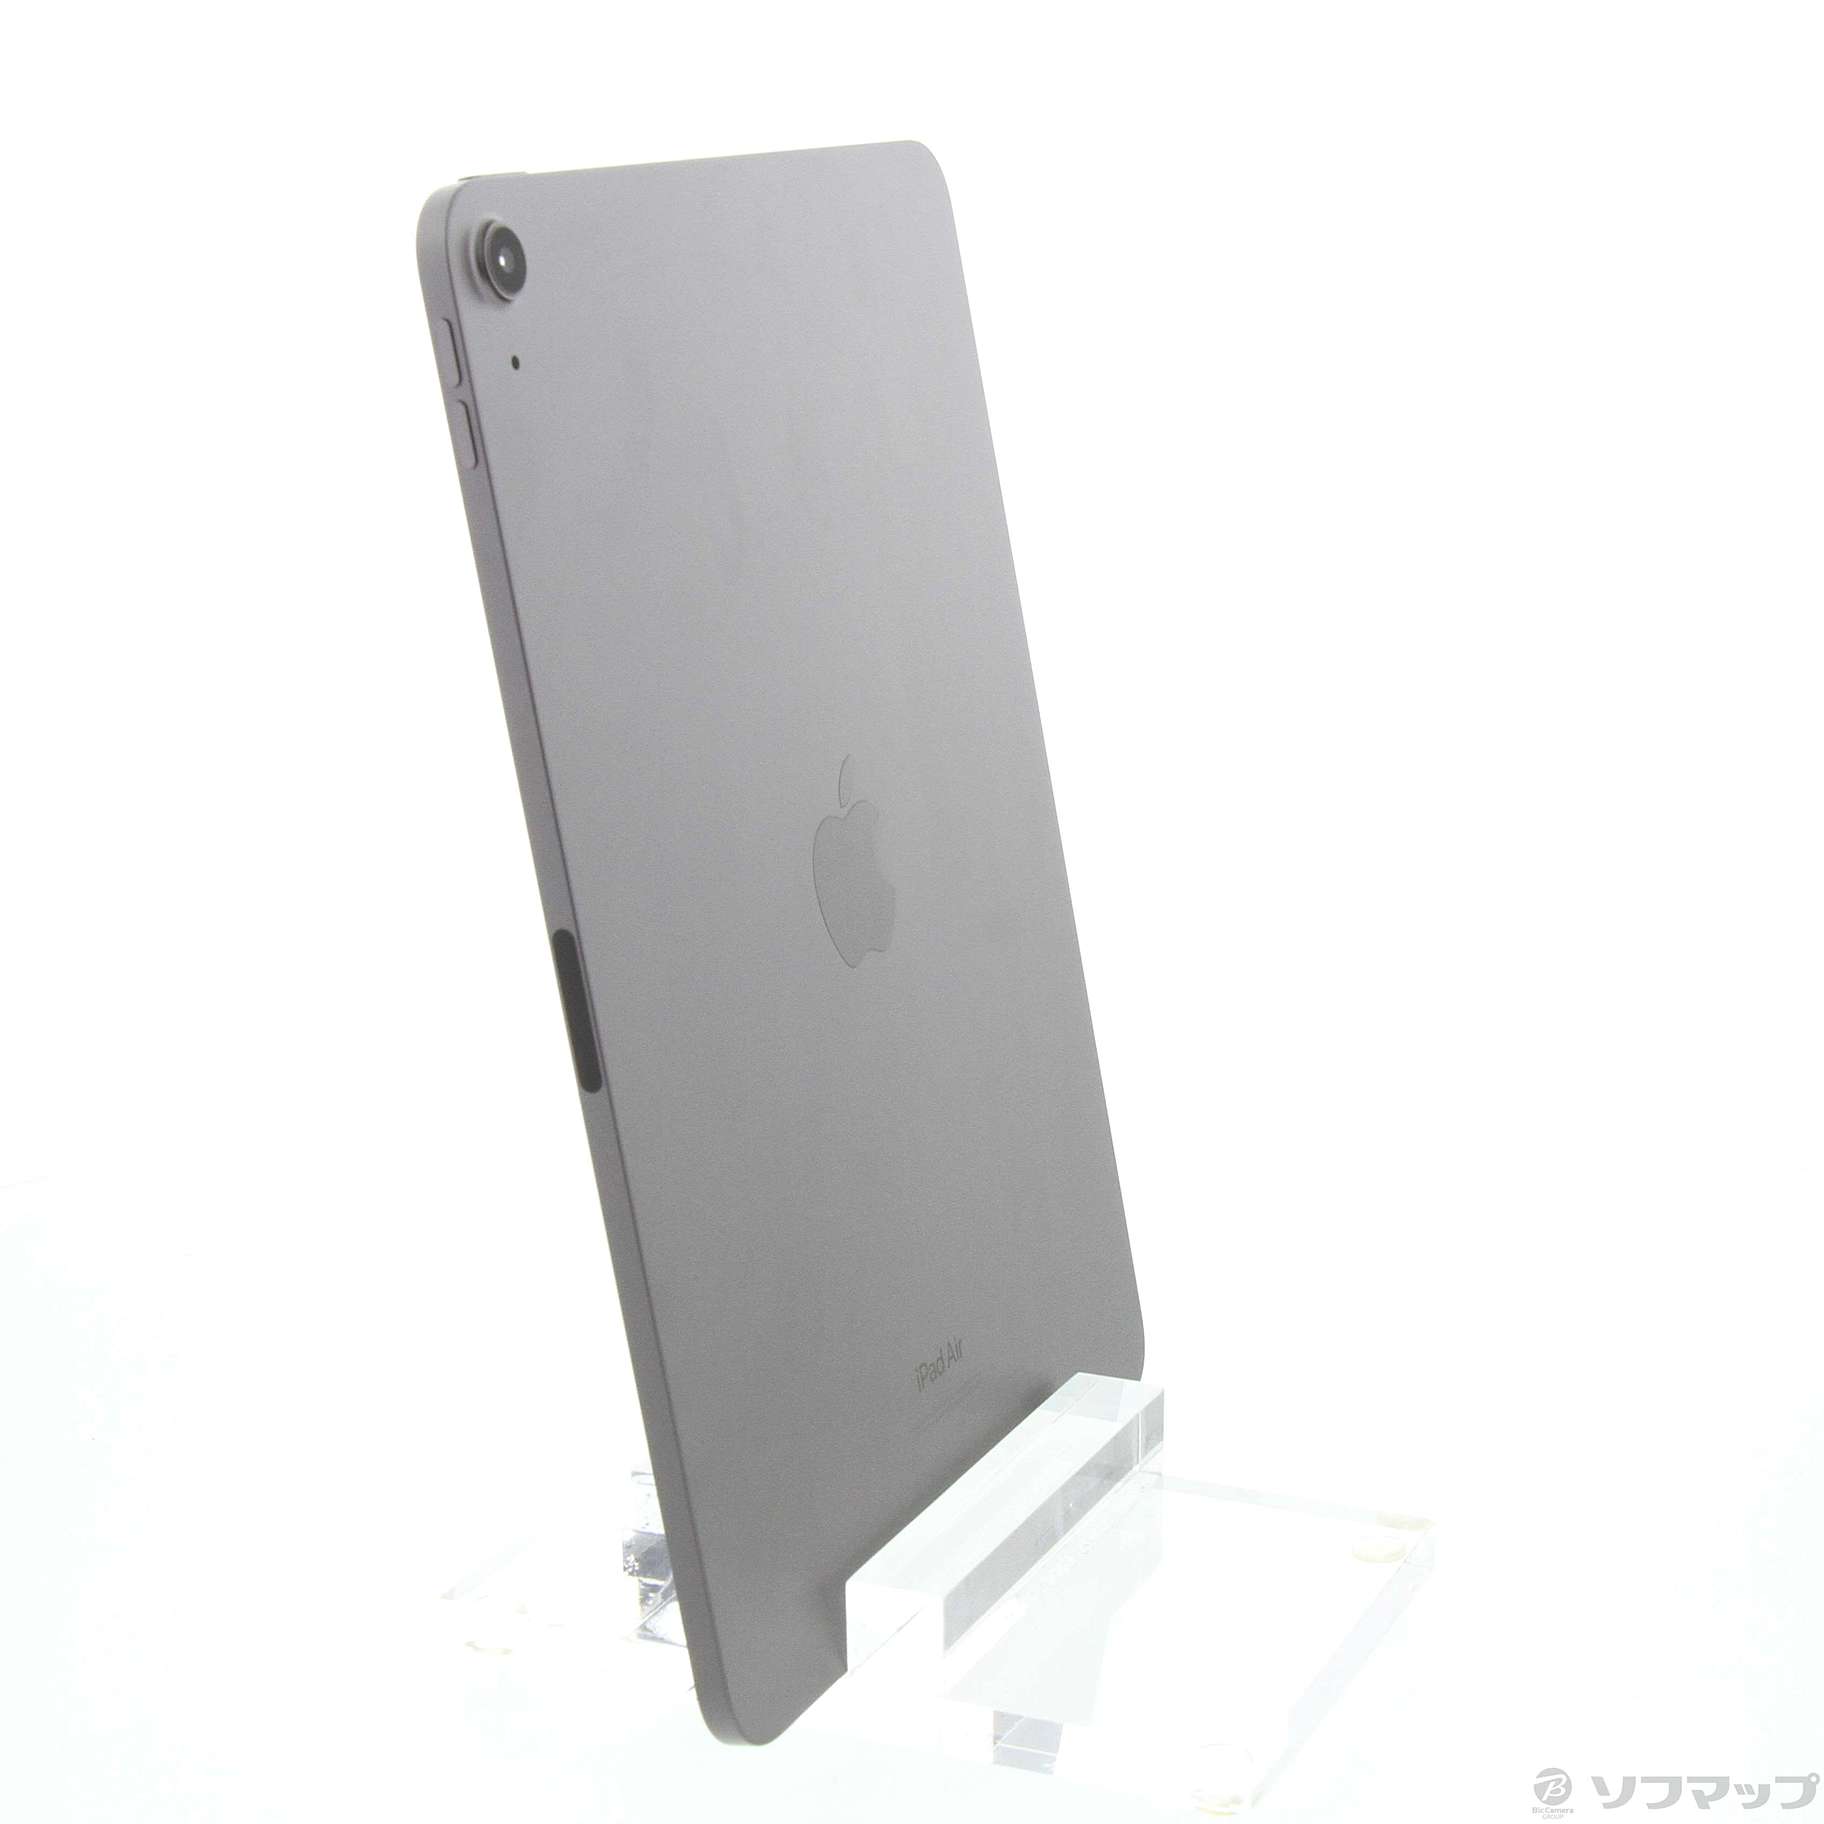 iPad Air 第5世代 256GB スペースグレイ MM9L3LL／A Wi-Fi